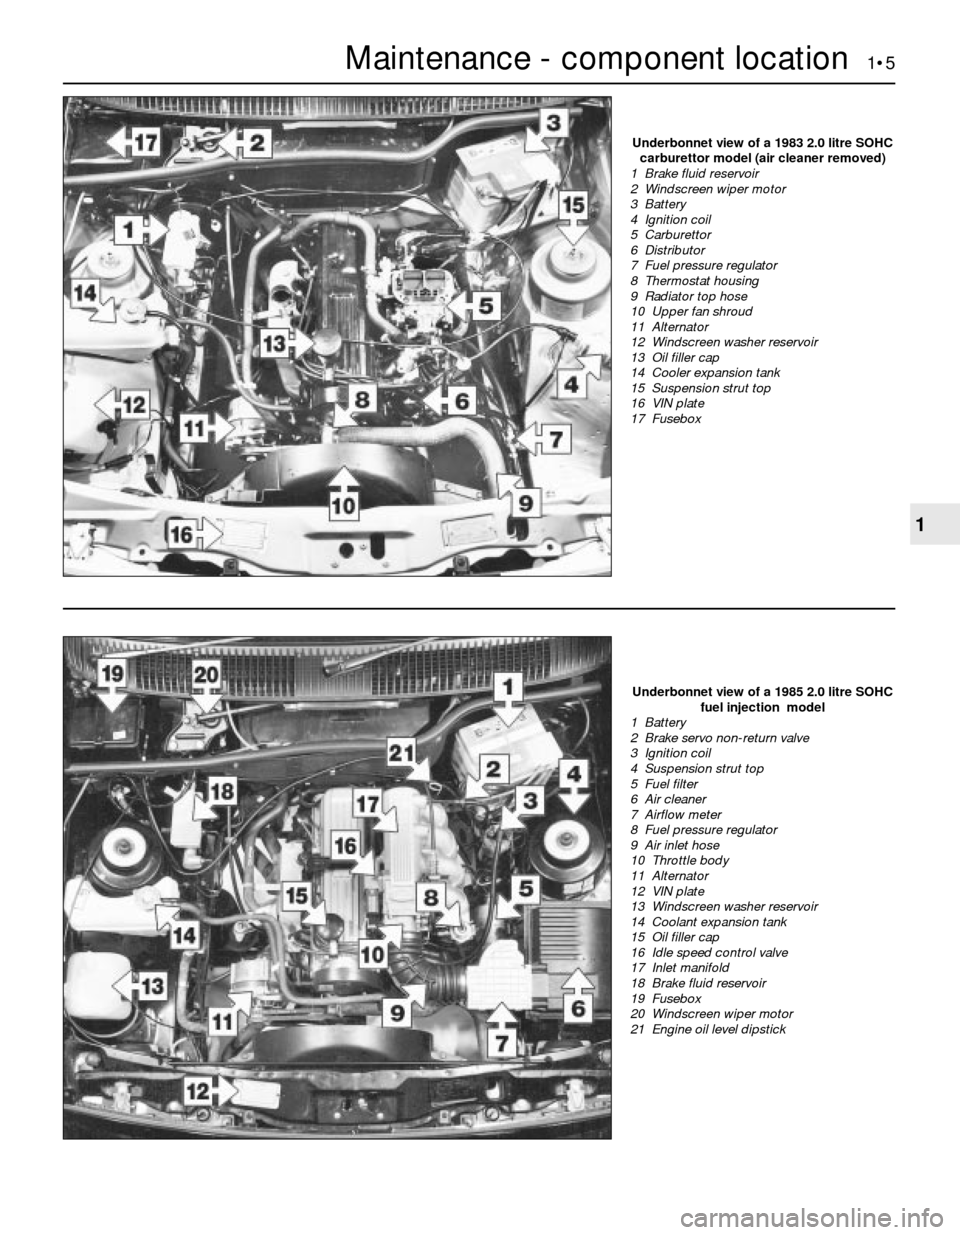 FORD SIERRA 1982 1.G Routine Manintenance And Servicing Workshop Manual Maintenance - component location  1•5
1
Underbonnet view of a 1985 2.0 litre SOHC
fuel injection  model
1  Battery
2  Brake servo non-return valve
3  Ignition coil
4  Suspension strut top
5  Fuel fi